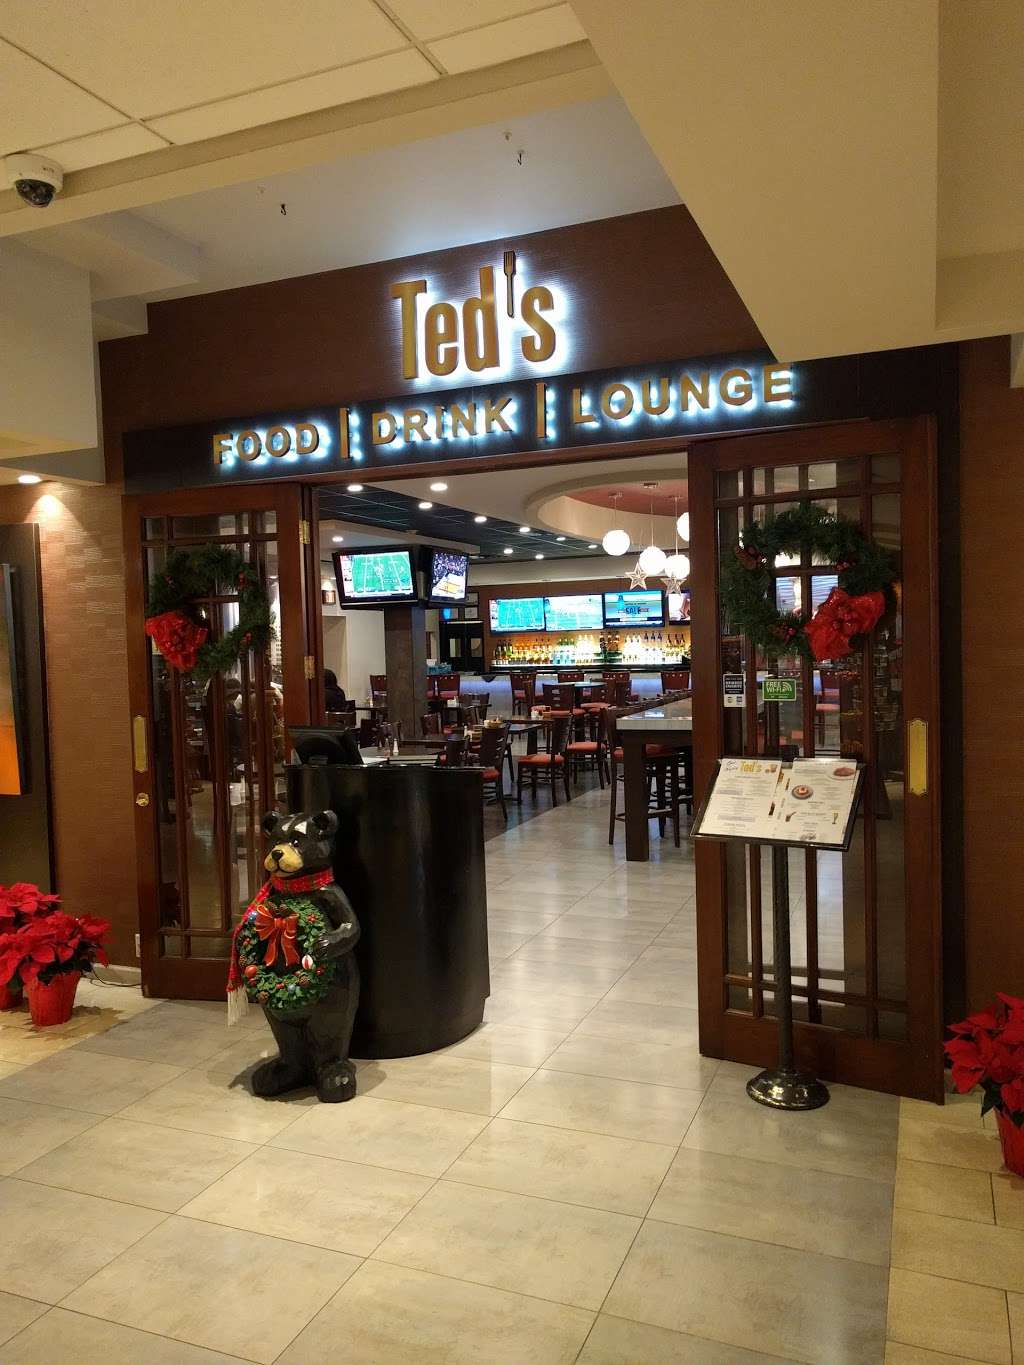 Teds Food Drink Lounge | 160 Frontage Rd, Newark, NJ 07114 | Phone: (973) 589-1000